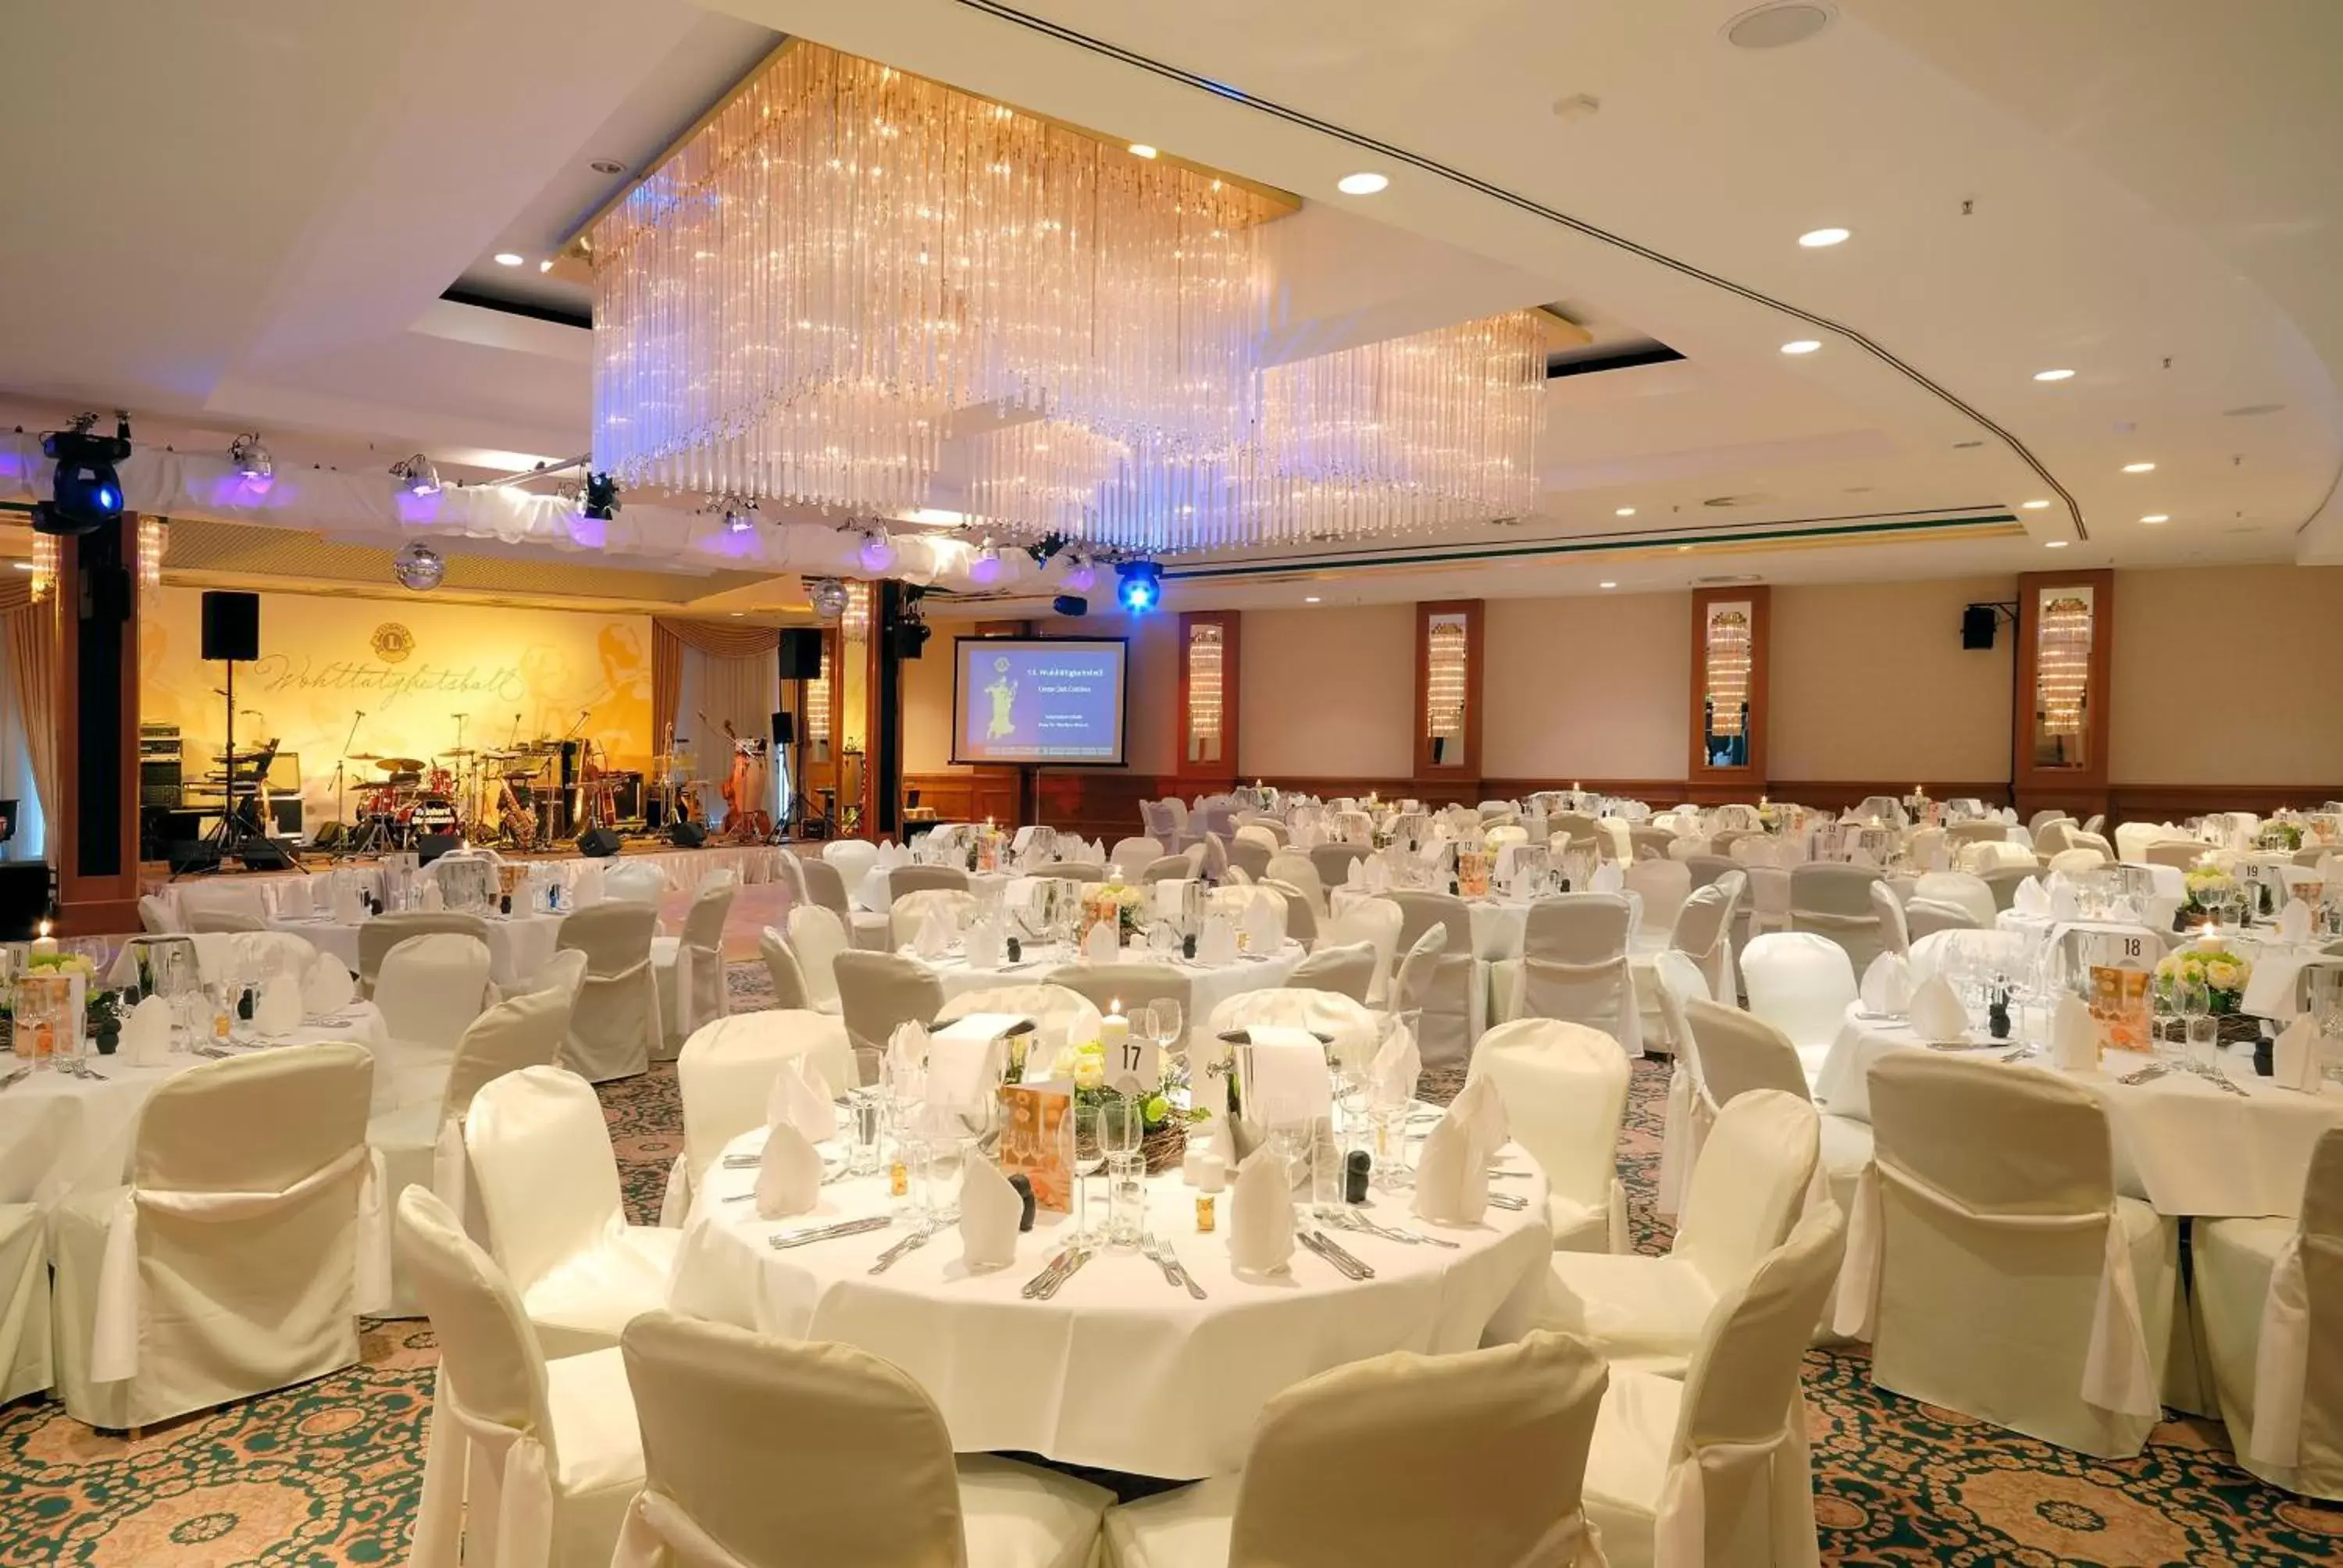 Banquet/Function facilities, Banquet Facilities in Radisson Blu Hotel Cottbus